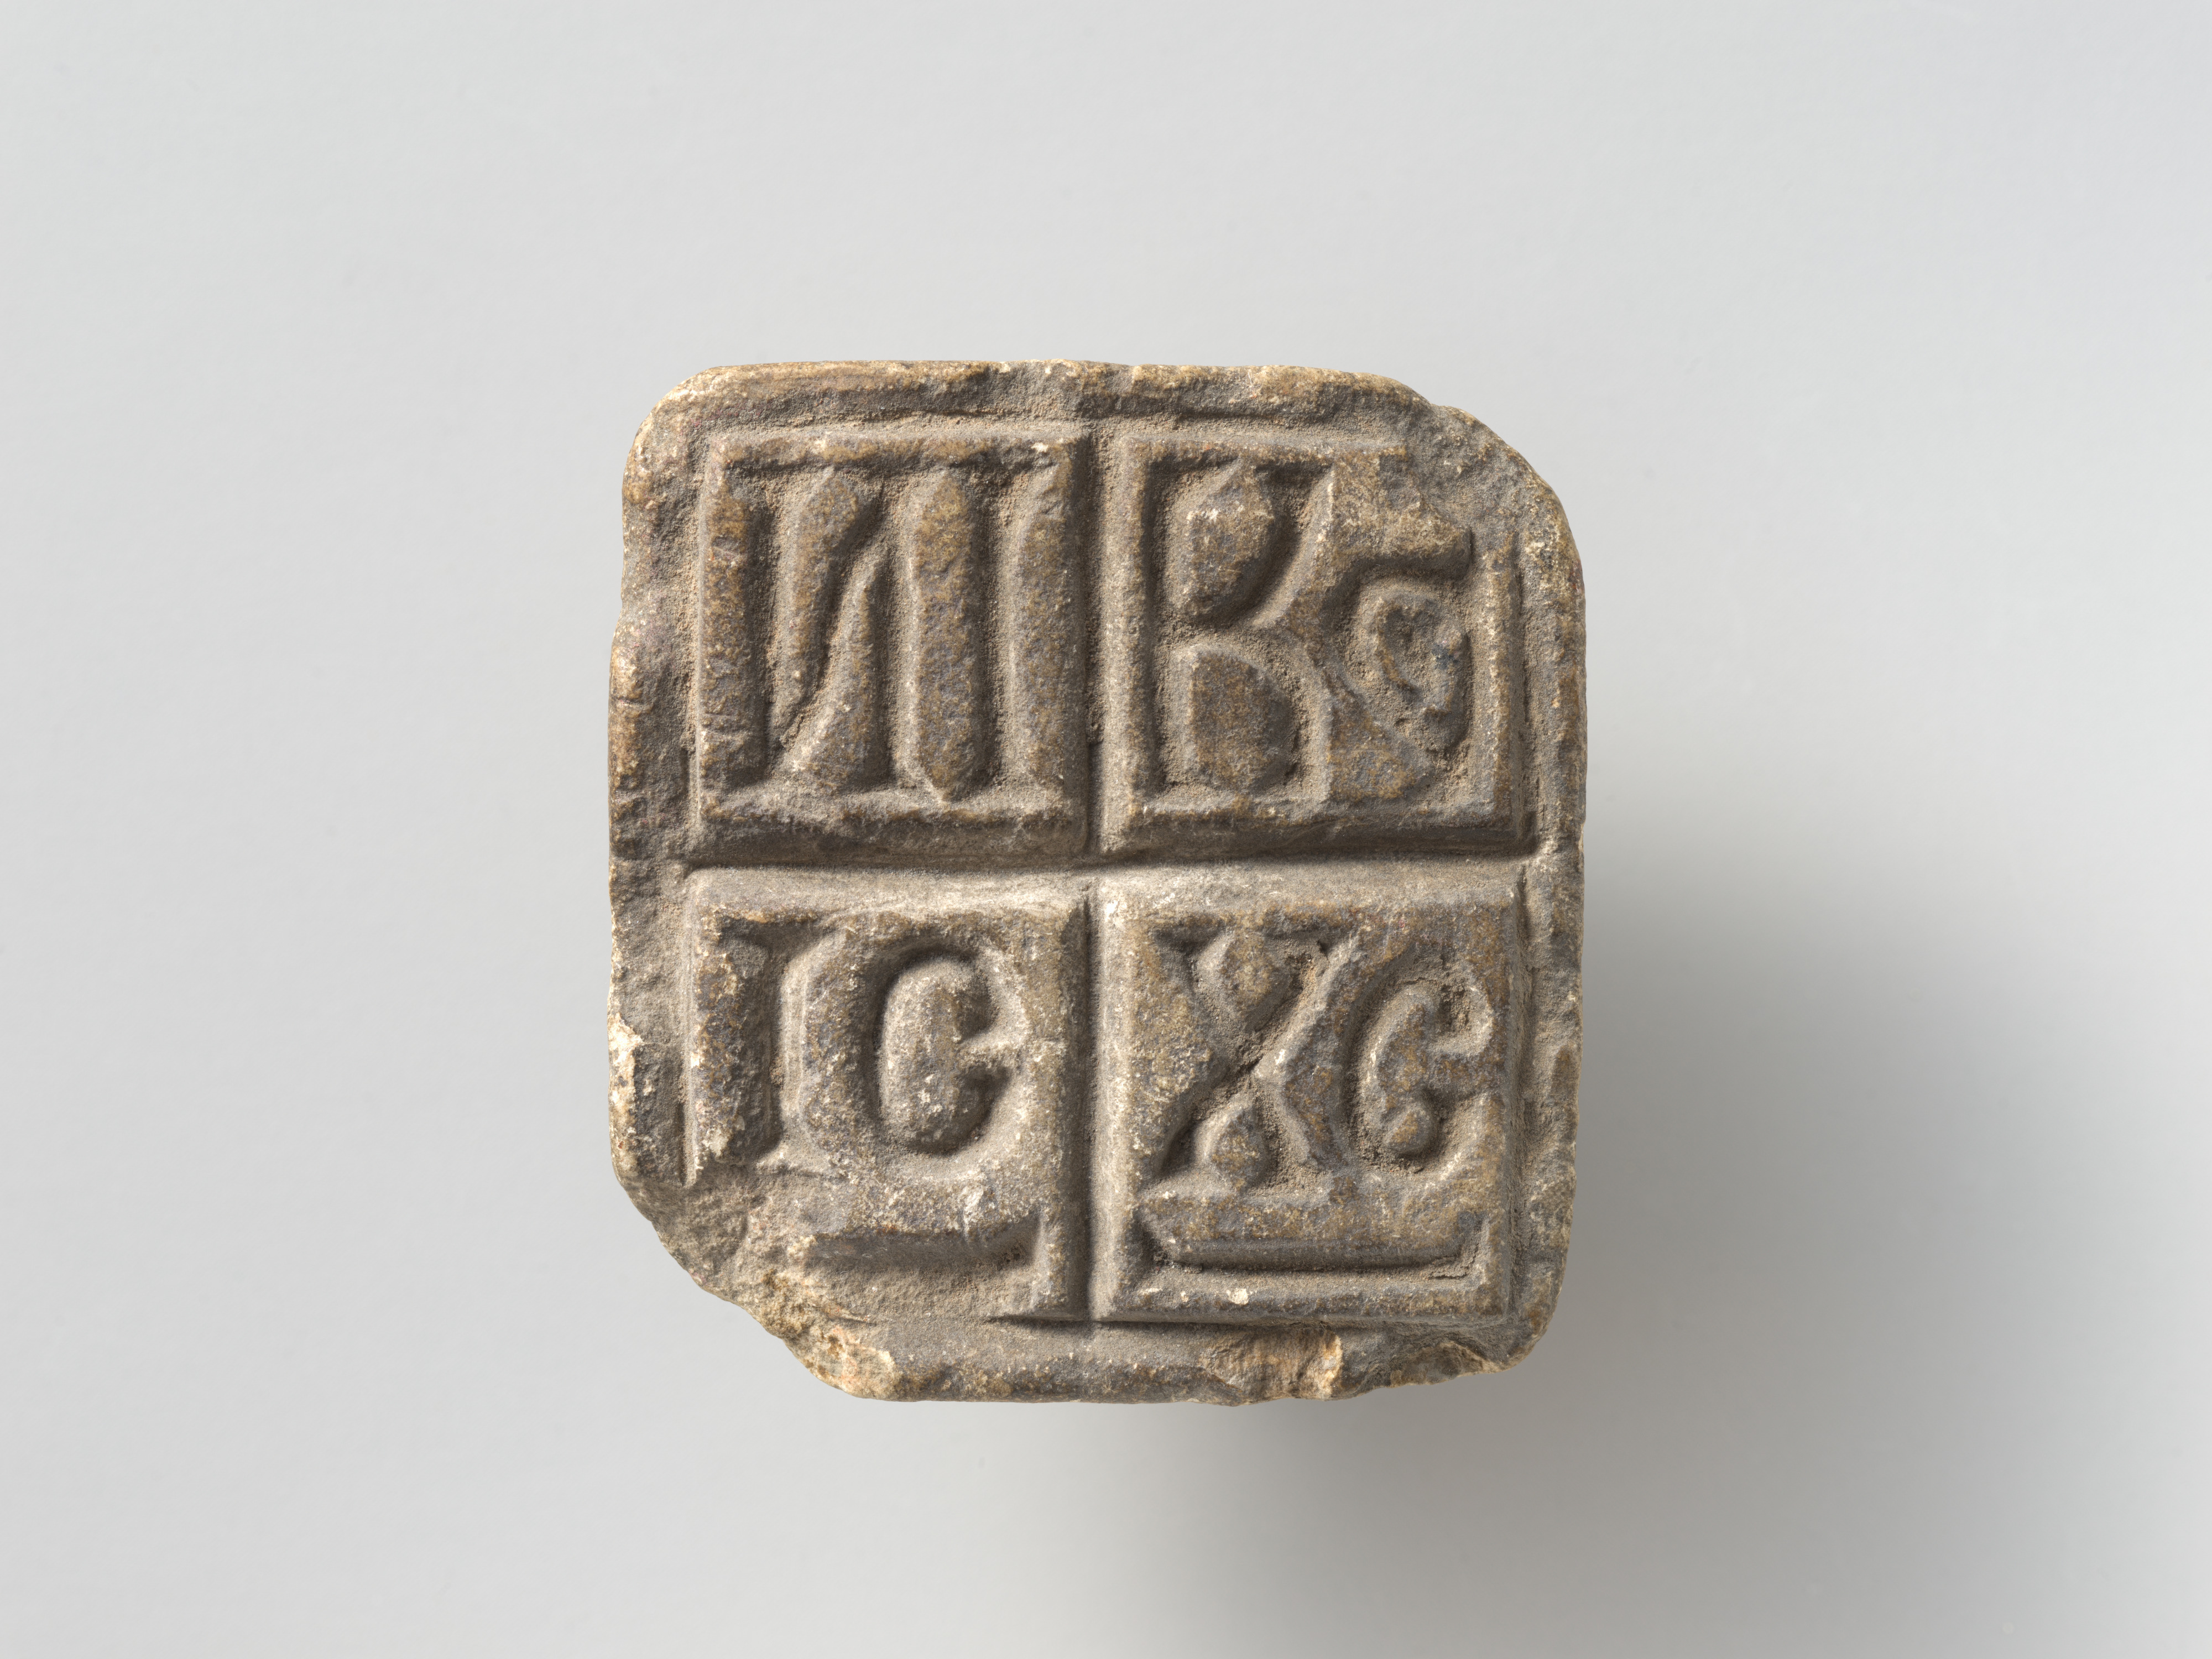 The Signaculum LXXIX Roman Bread Stamp